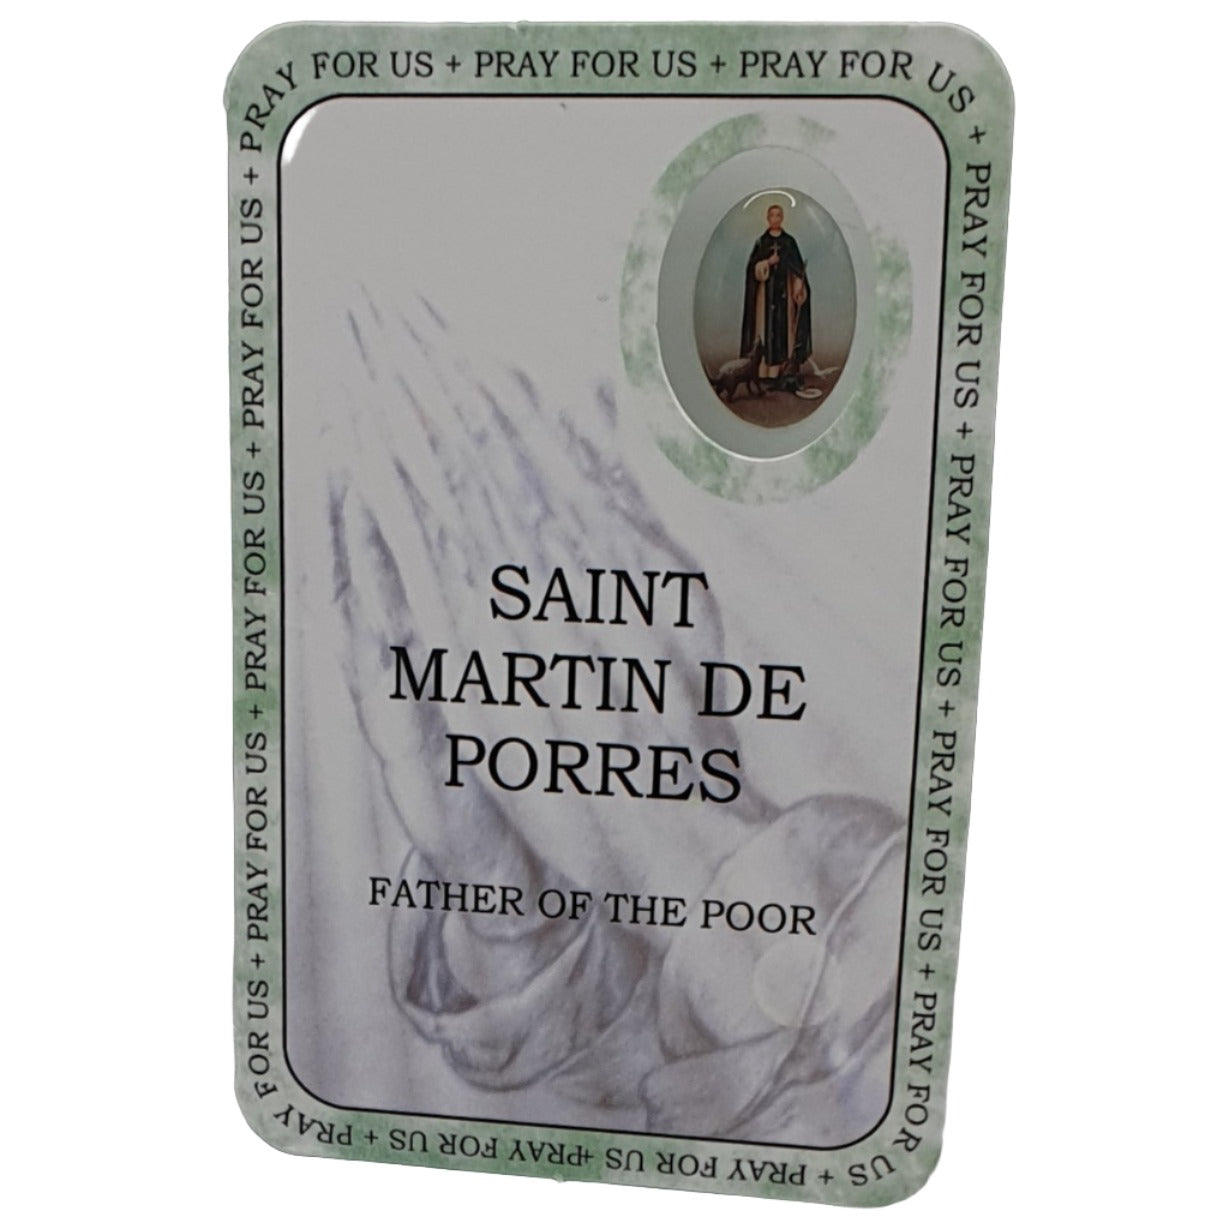 St Martin De Porres Prayer Card - Father of the Poor